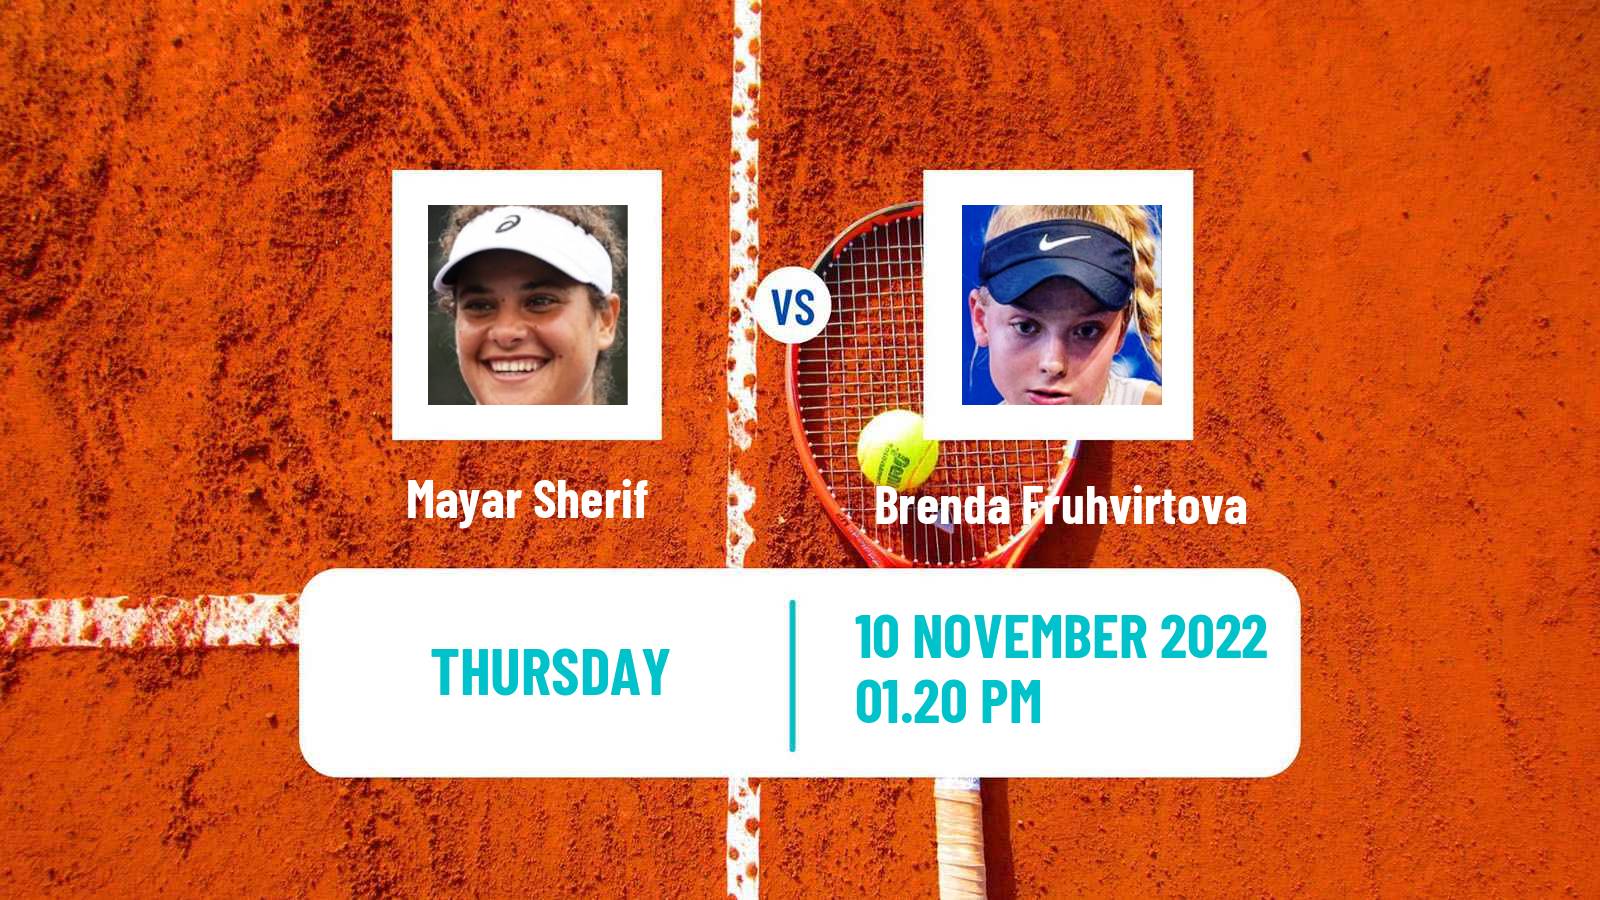 Tennis ATP Challenger Mayar Sherif - Brenda Fruhvirtova